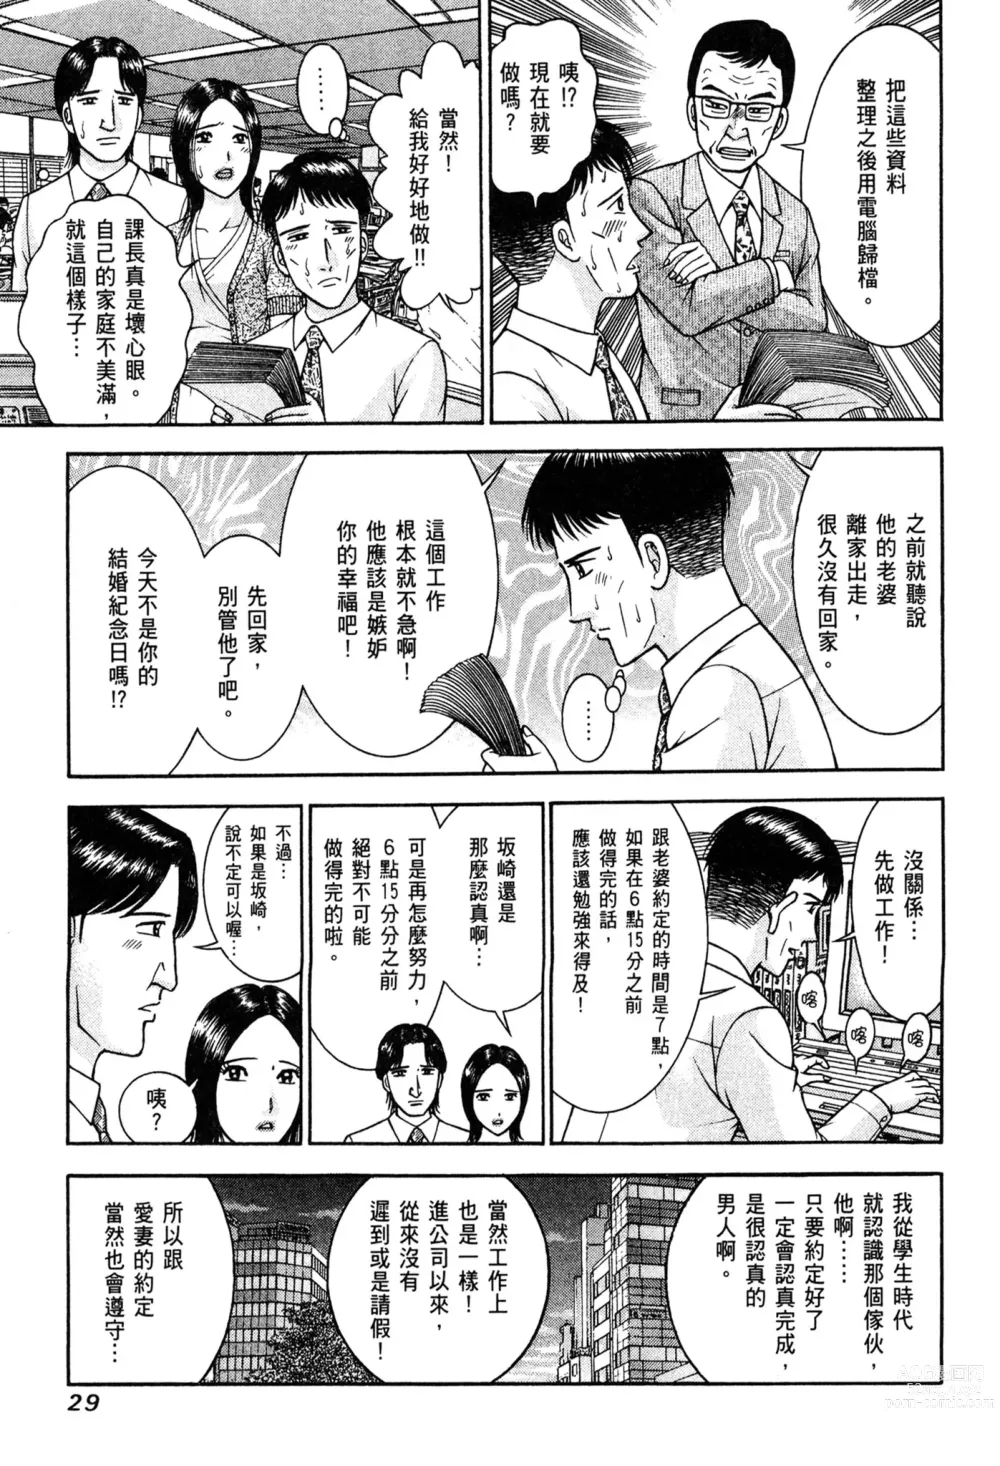 Page 31 of manga 現代美人妻圖鑑